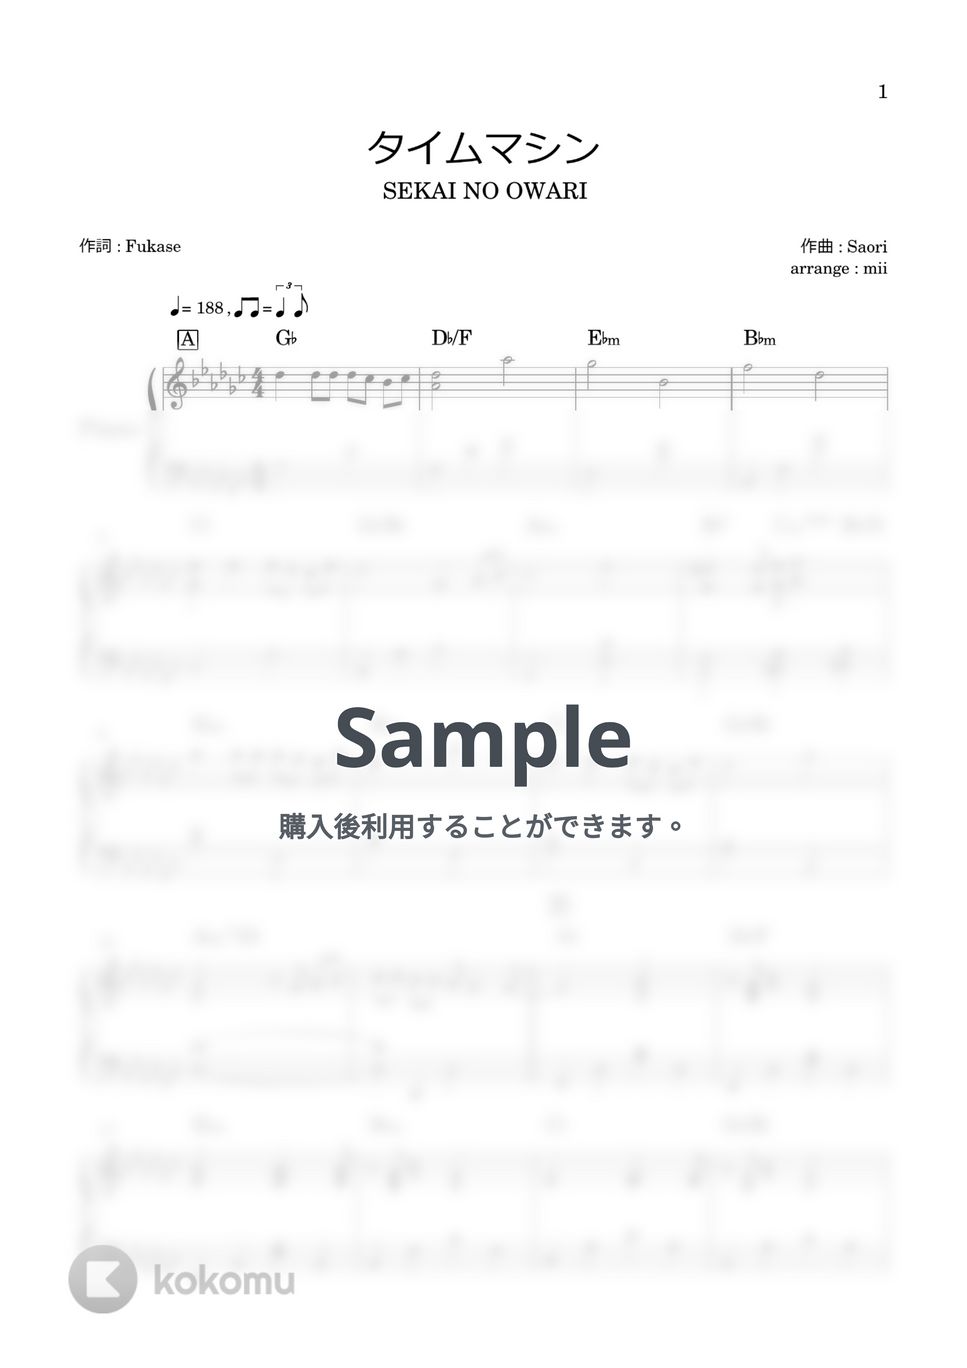 SEKAI NO OWARI - タイムマシン (赤ずきん、旅の途中で死体と出会う 主題歌) by miiの楽譜棚